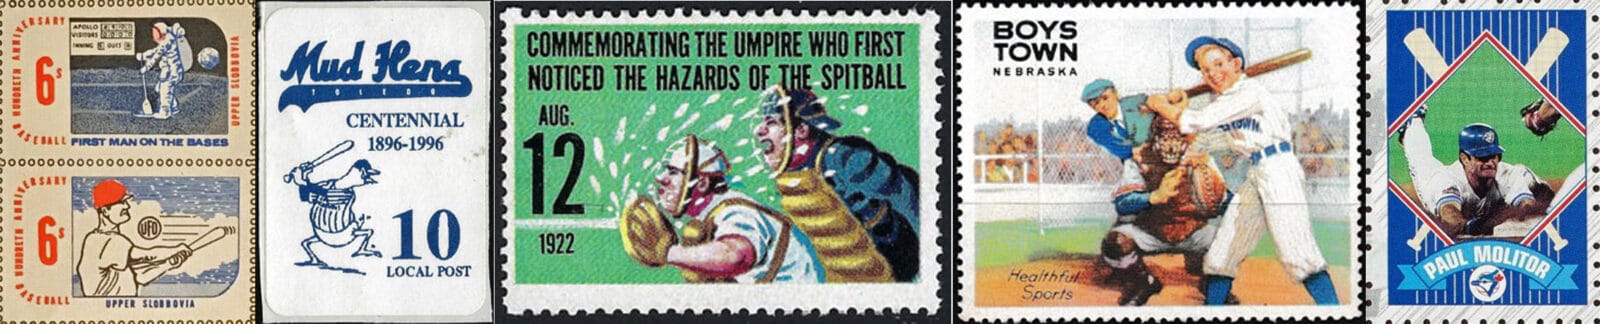 Baseball Stamps, non-postage, header